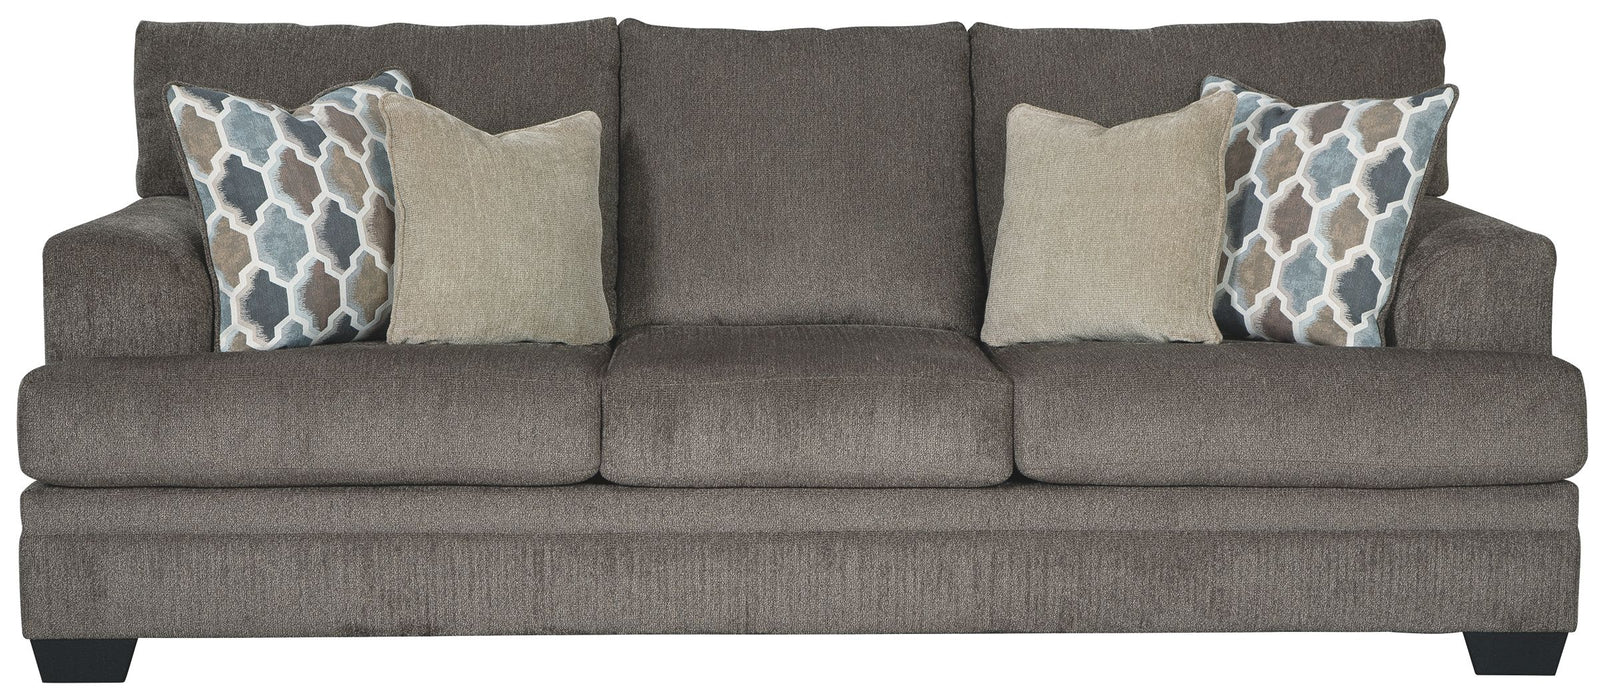 Dorsten - Slate - Queen Sofa Sleeper Unique Piece Furniture